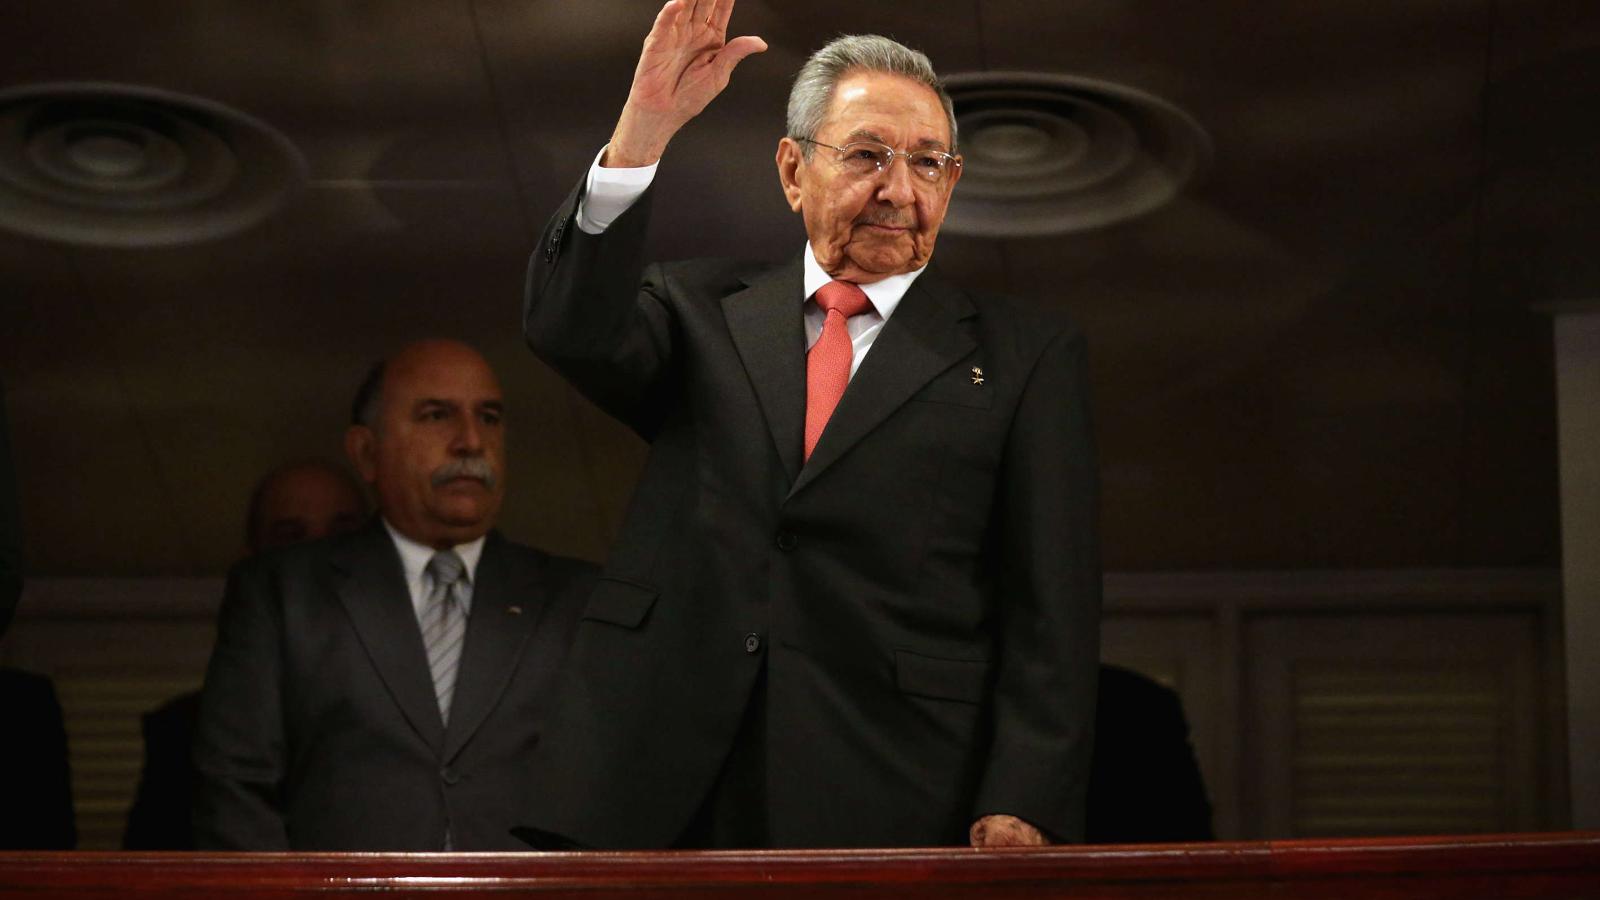 Raúl Castro prepares to give his lead in Cuba